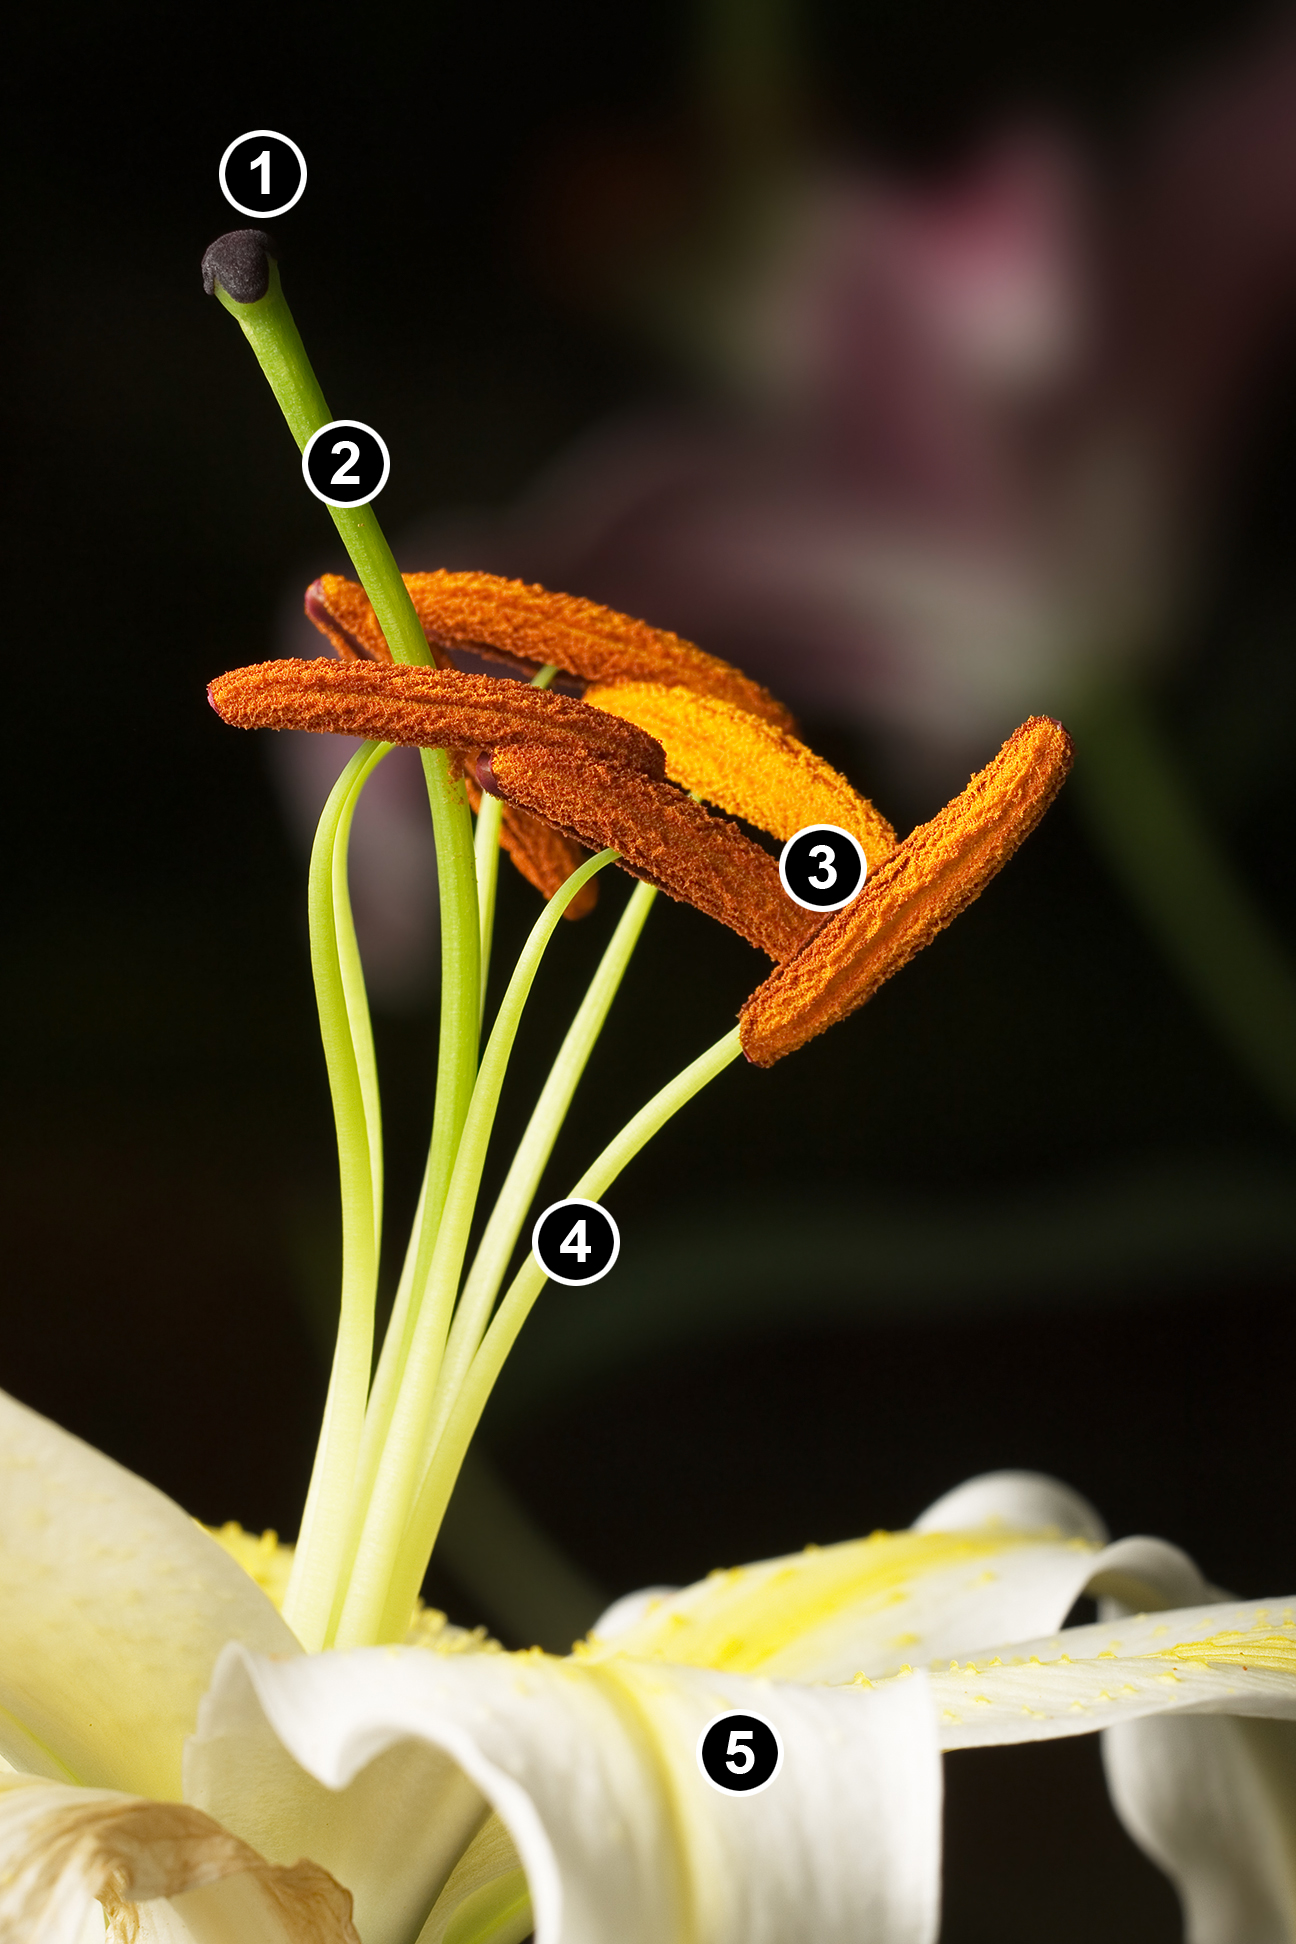 Reproductive parts of Easter Lily (Lilium longiflorum).1. Stigma, 2. Style, 3. Stamens, 4. Filament, 5. Petal